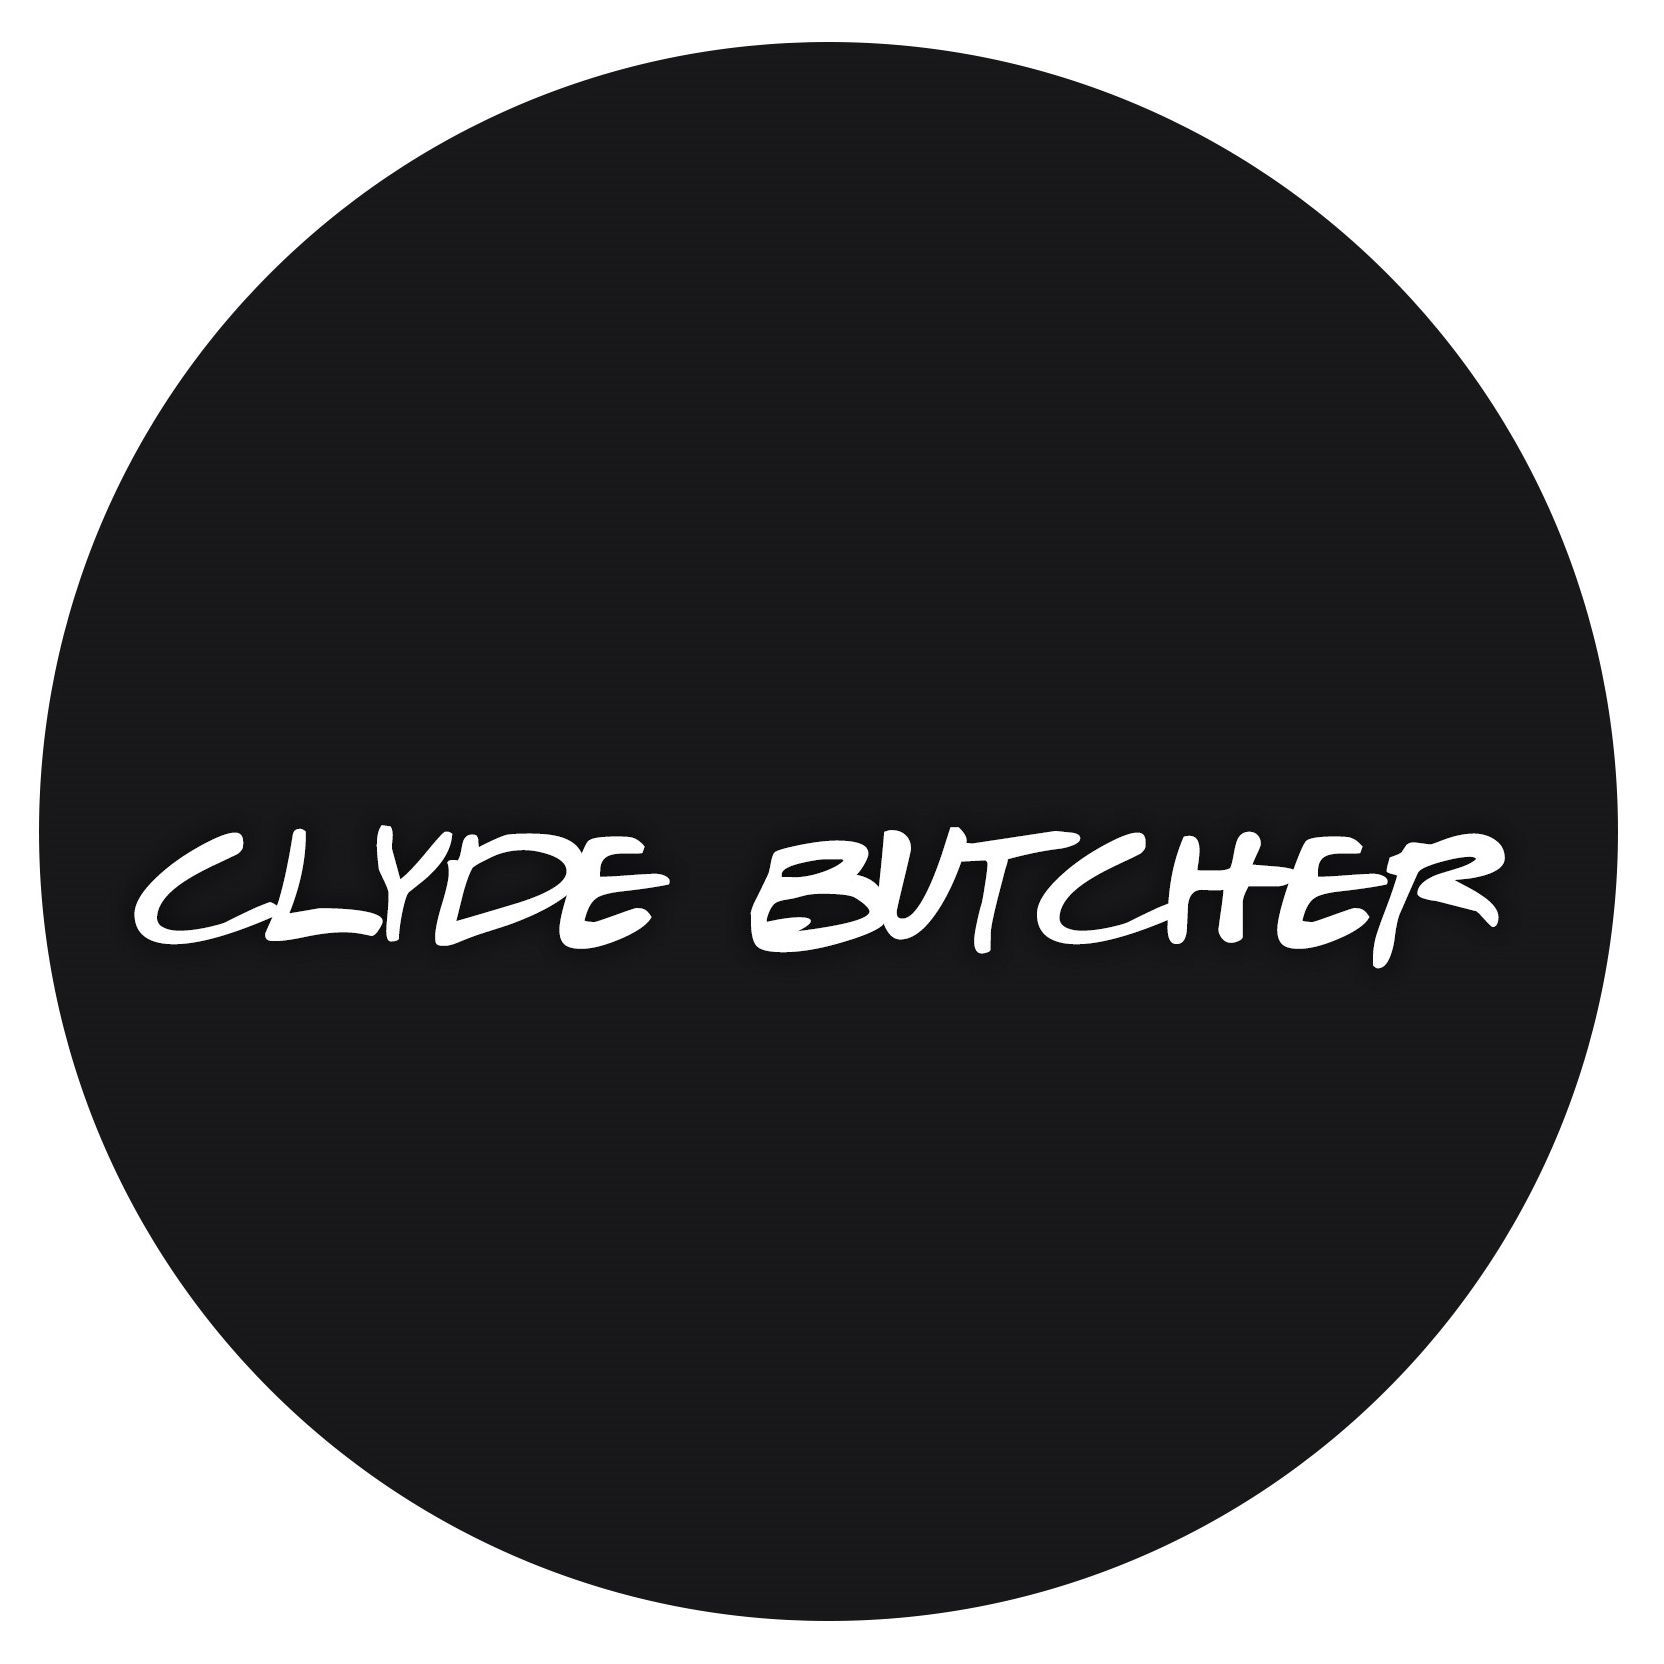 Clyde Butcher